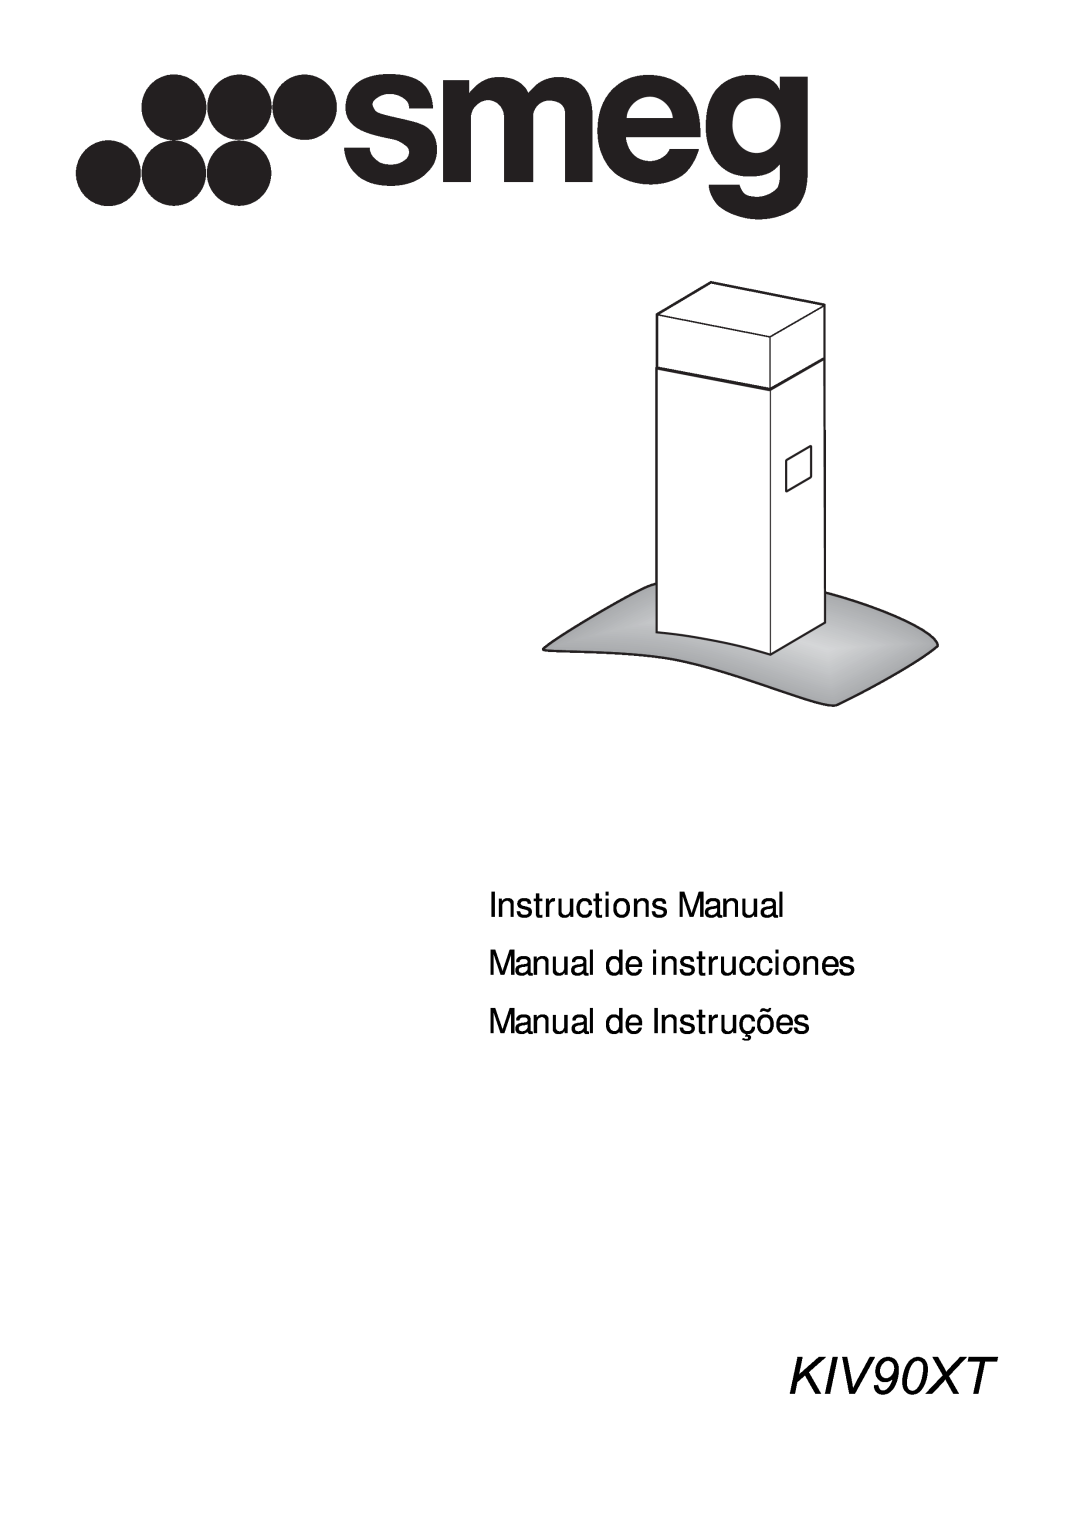 Smeg KIV90XT manual Instructions Manual Manual de instrucciones Manual de Instruções 